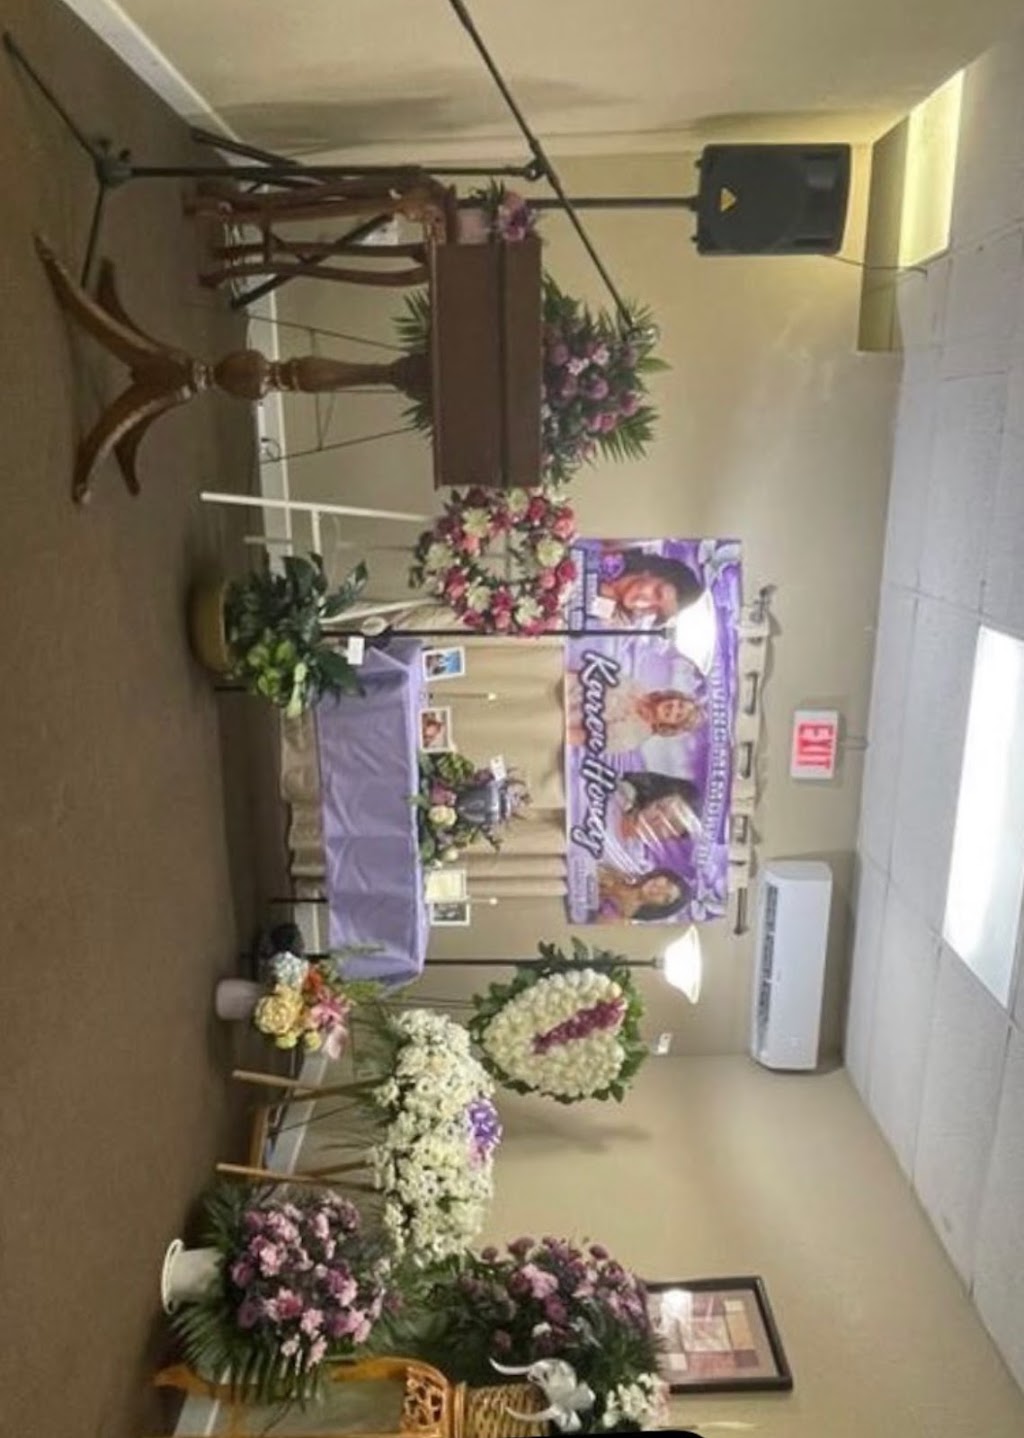 Fuller Brothers Funeral Home, Inc. | Photo 10 of 10 | Address: 3125 W Atlantic Blvd, Pompano Beach, FL 33069, USA | Phone: (954) 366-3758